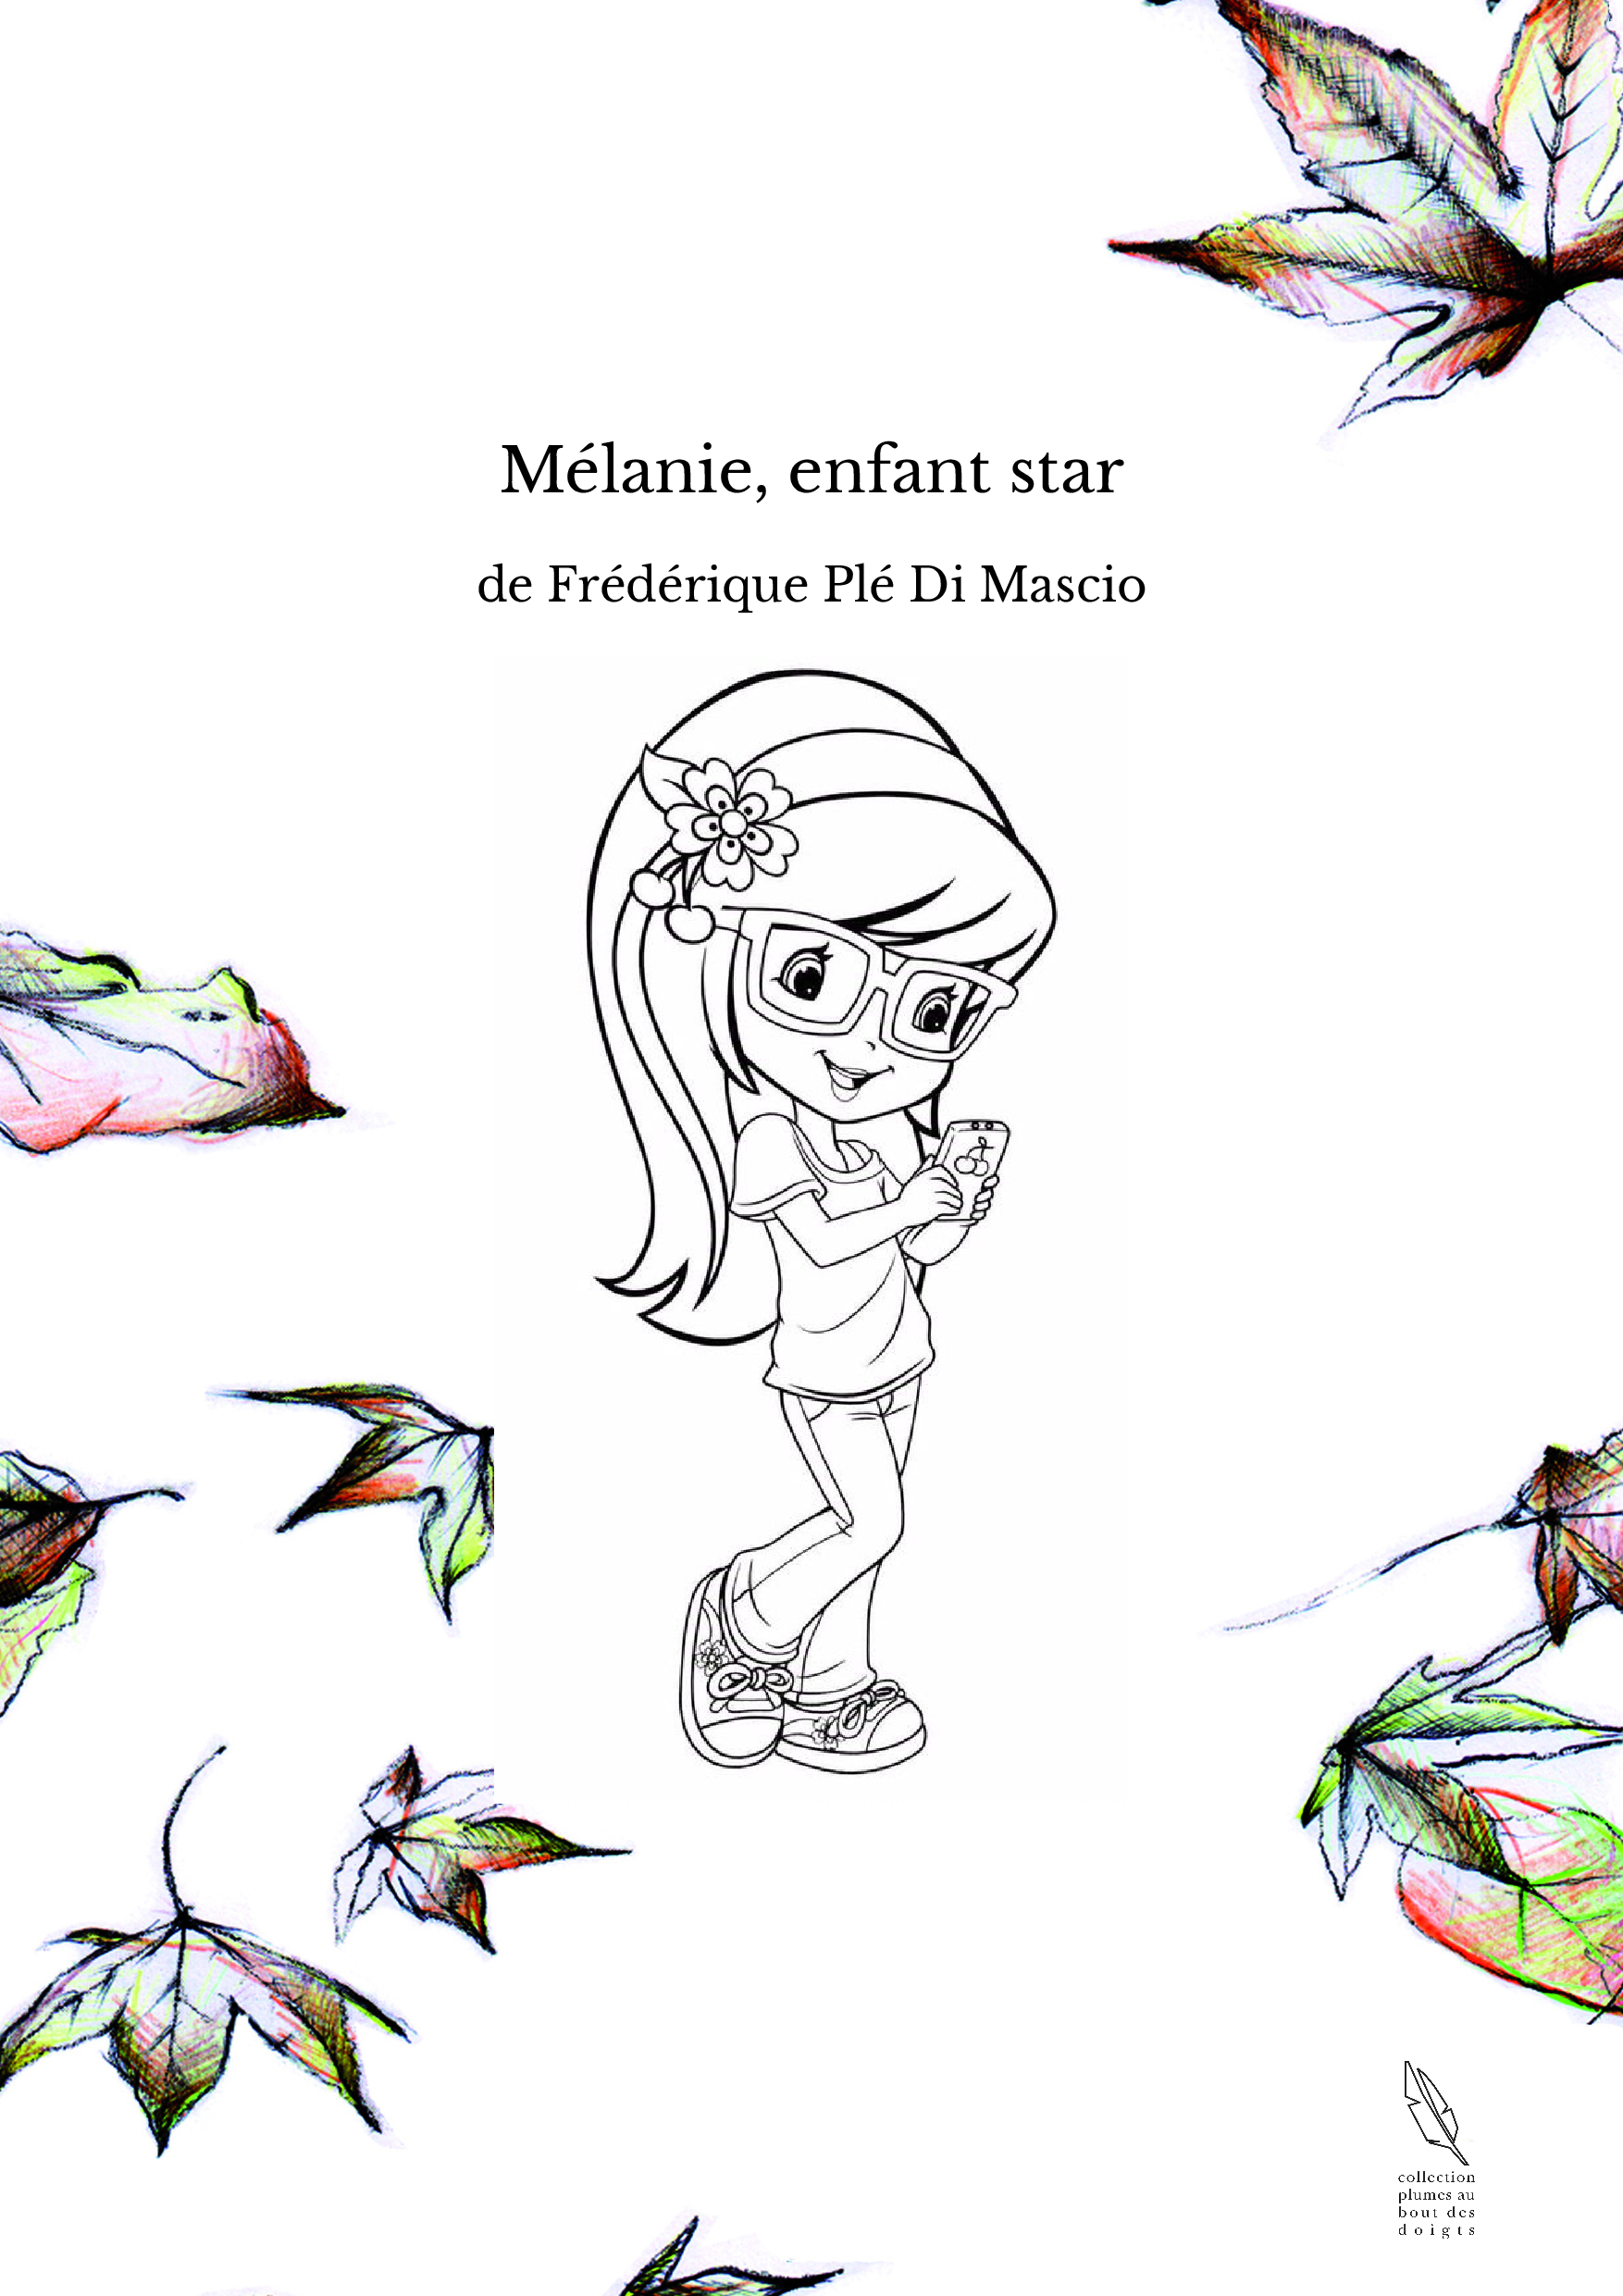 Mélanie, enfant star